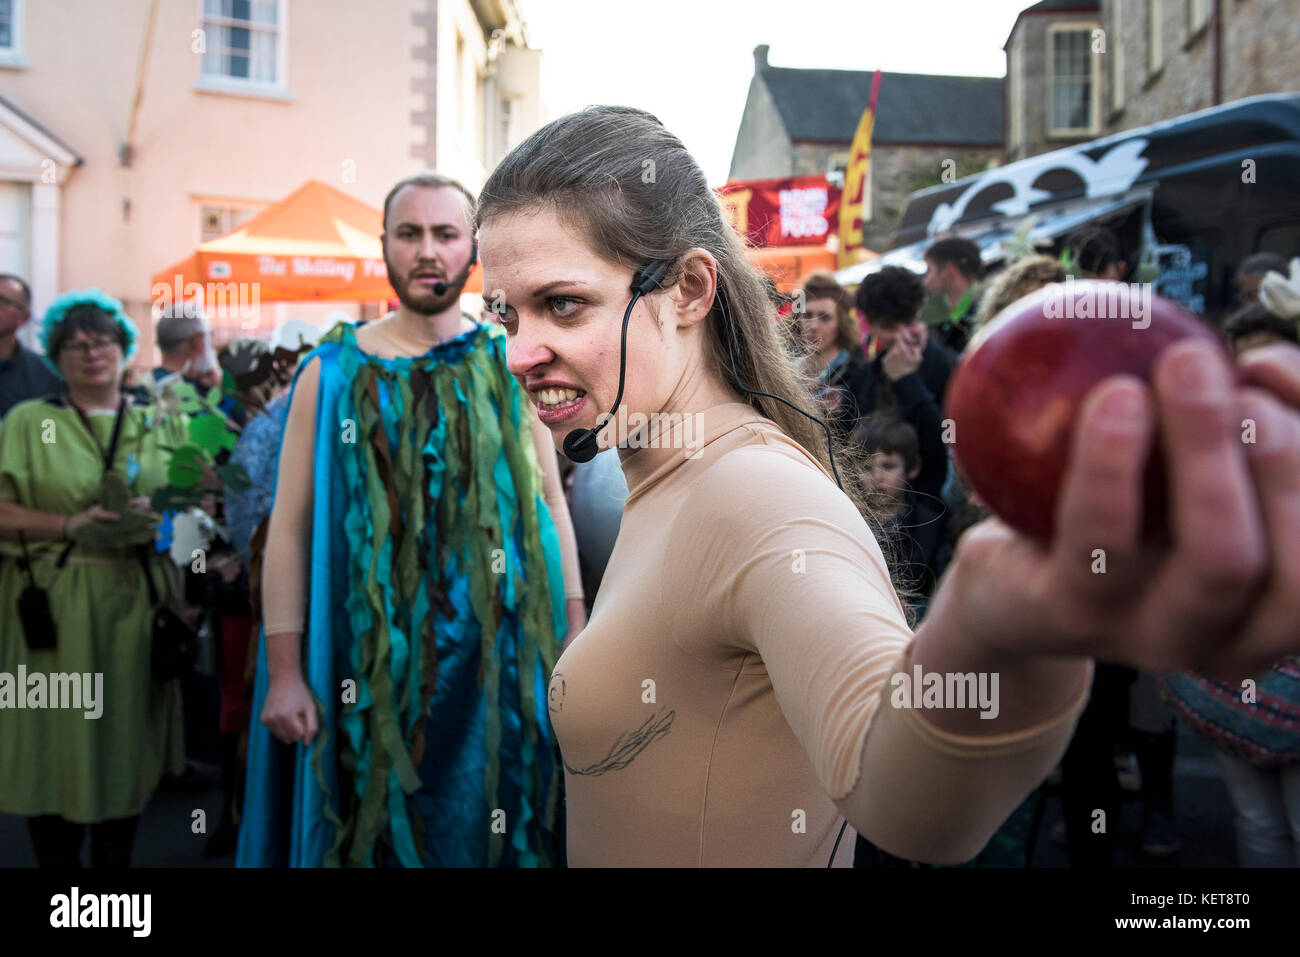 Die Ordinalia - Cornish Mysterienspiele durchgeführt während der penryn Kemeneth zwei Tage Heritage Festival im Penryn Cornwall. Stockfoto